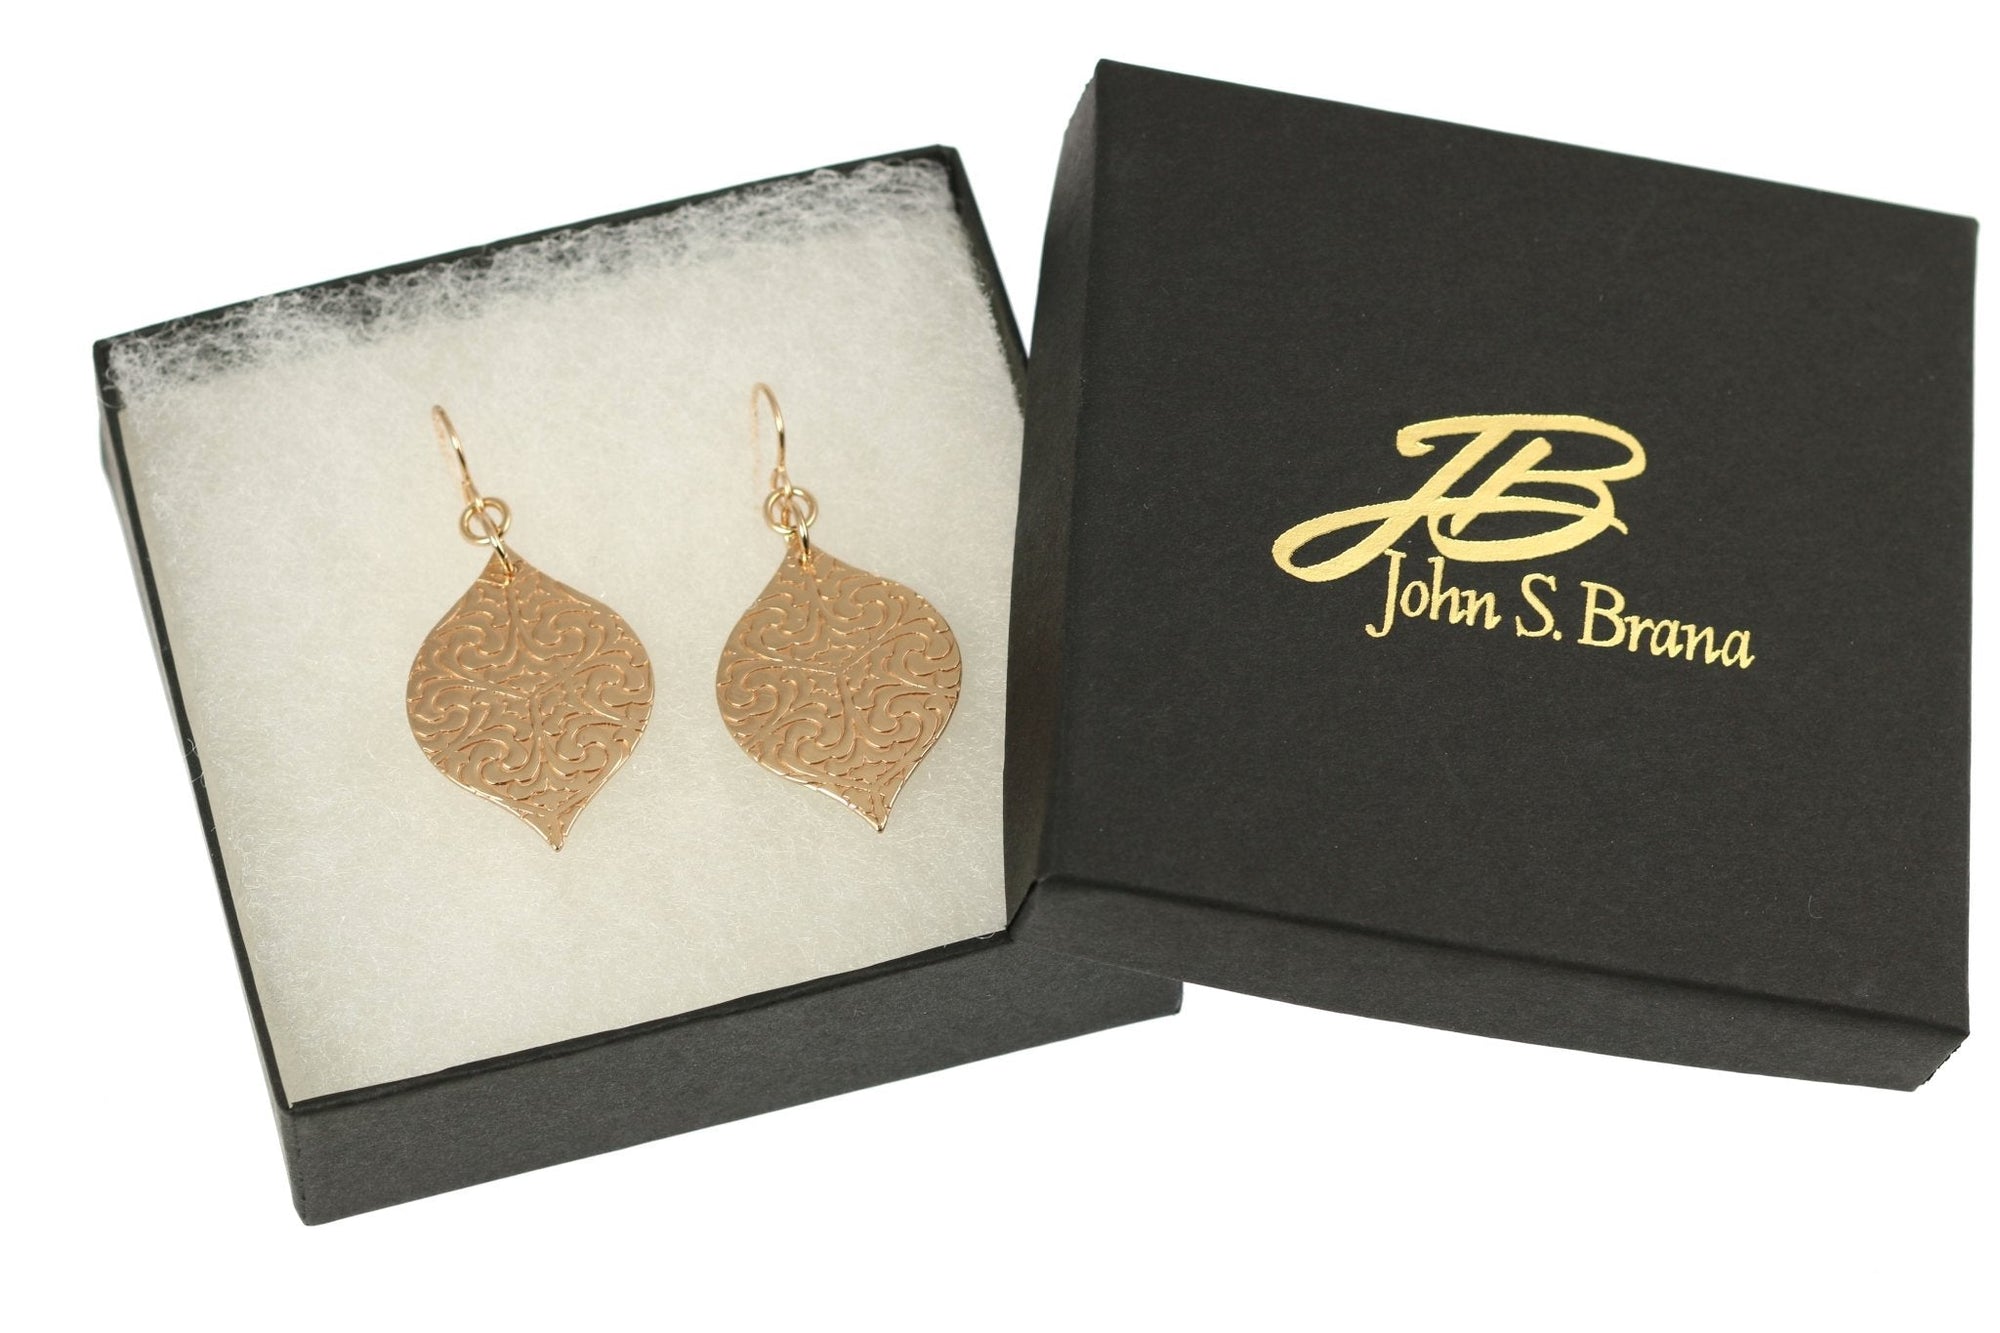 Damask Embossed Bronze Marrakesh  Drop Earrings in Gift Box